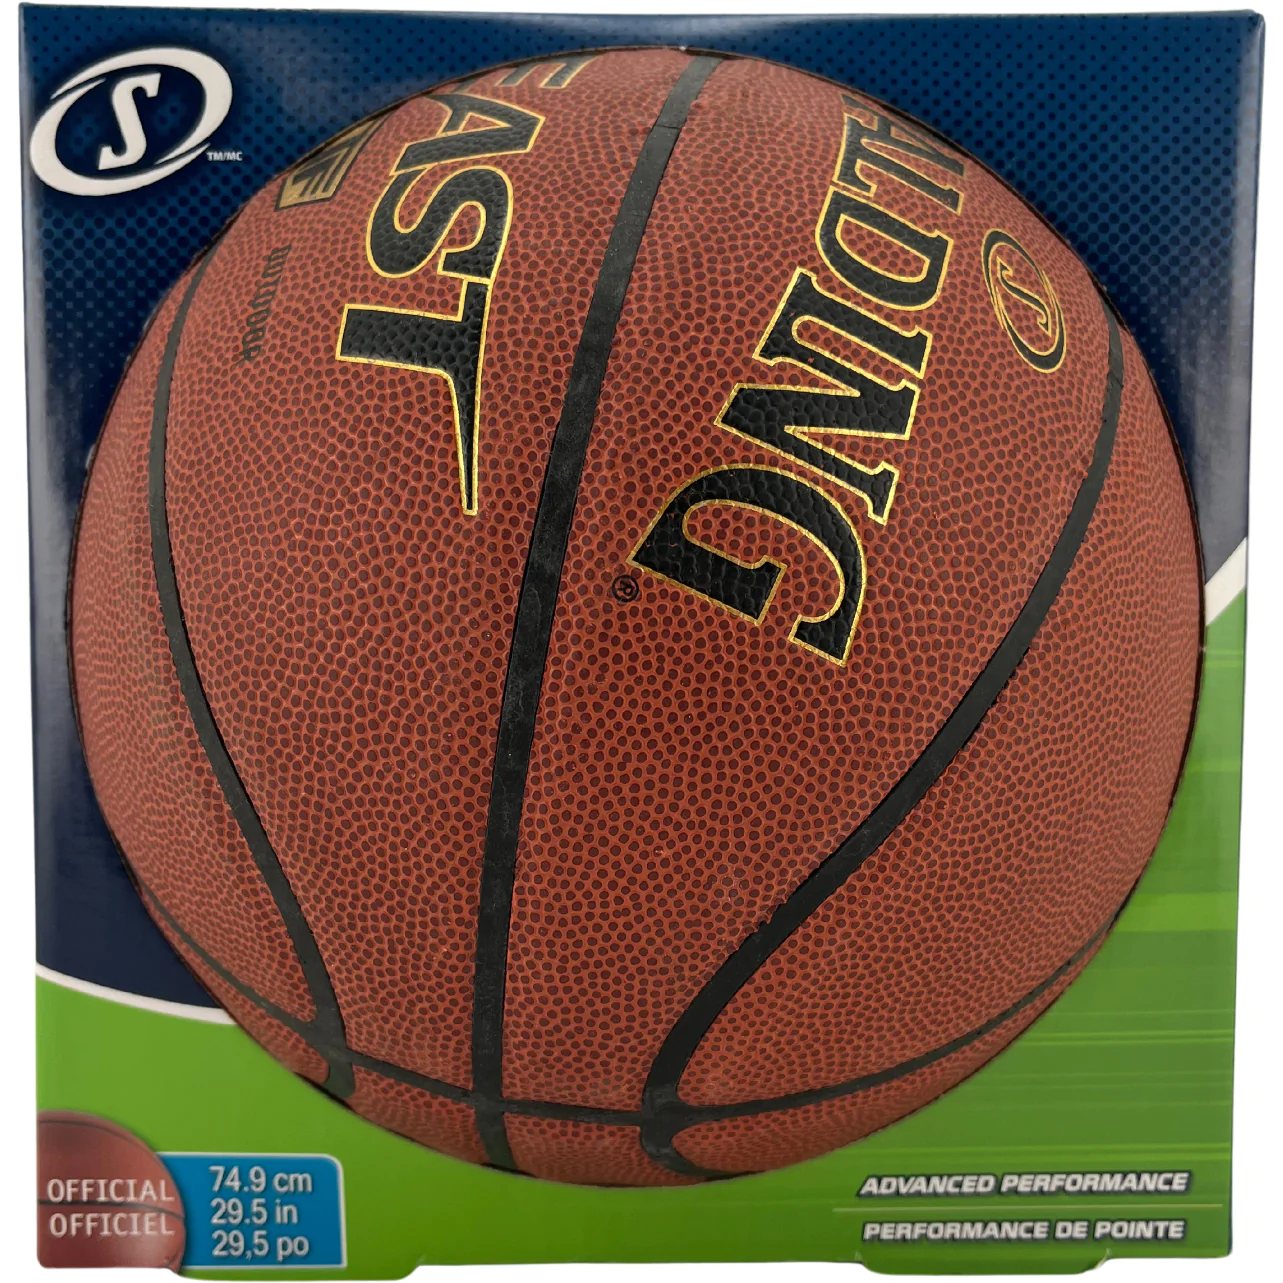 Spalding Basketball / Official Basketball Size / 29.5" **DEALS**